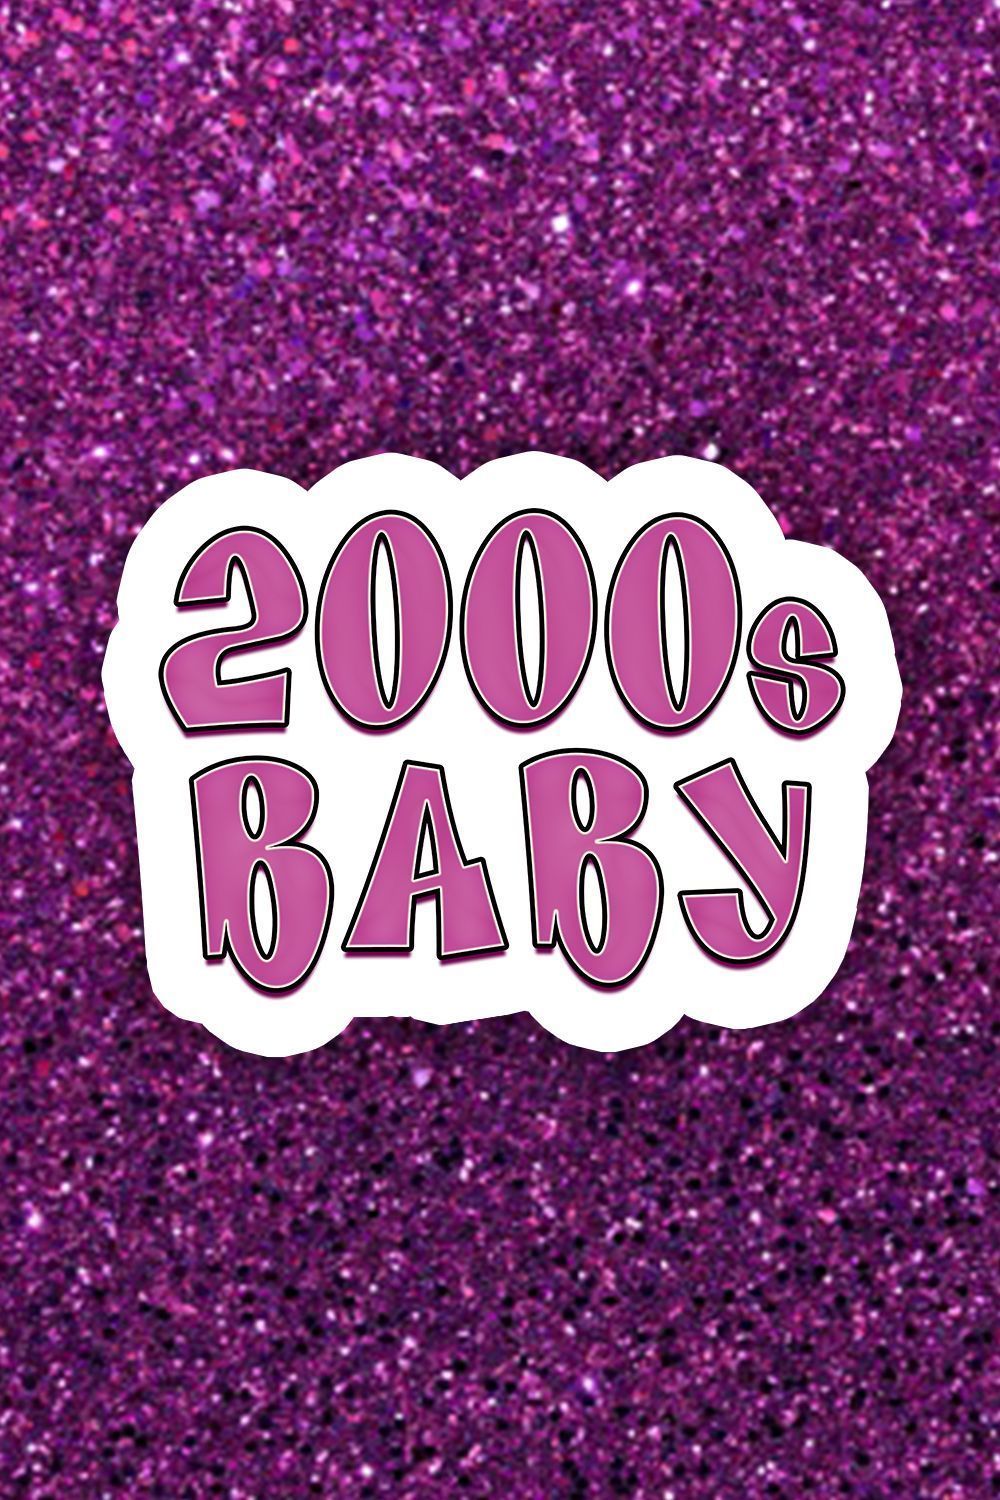 2000s baby sticker on a purple glitter background - 2000s